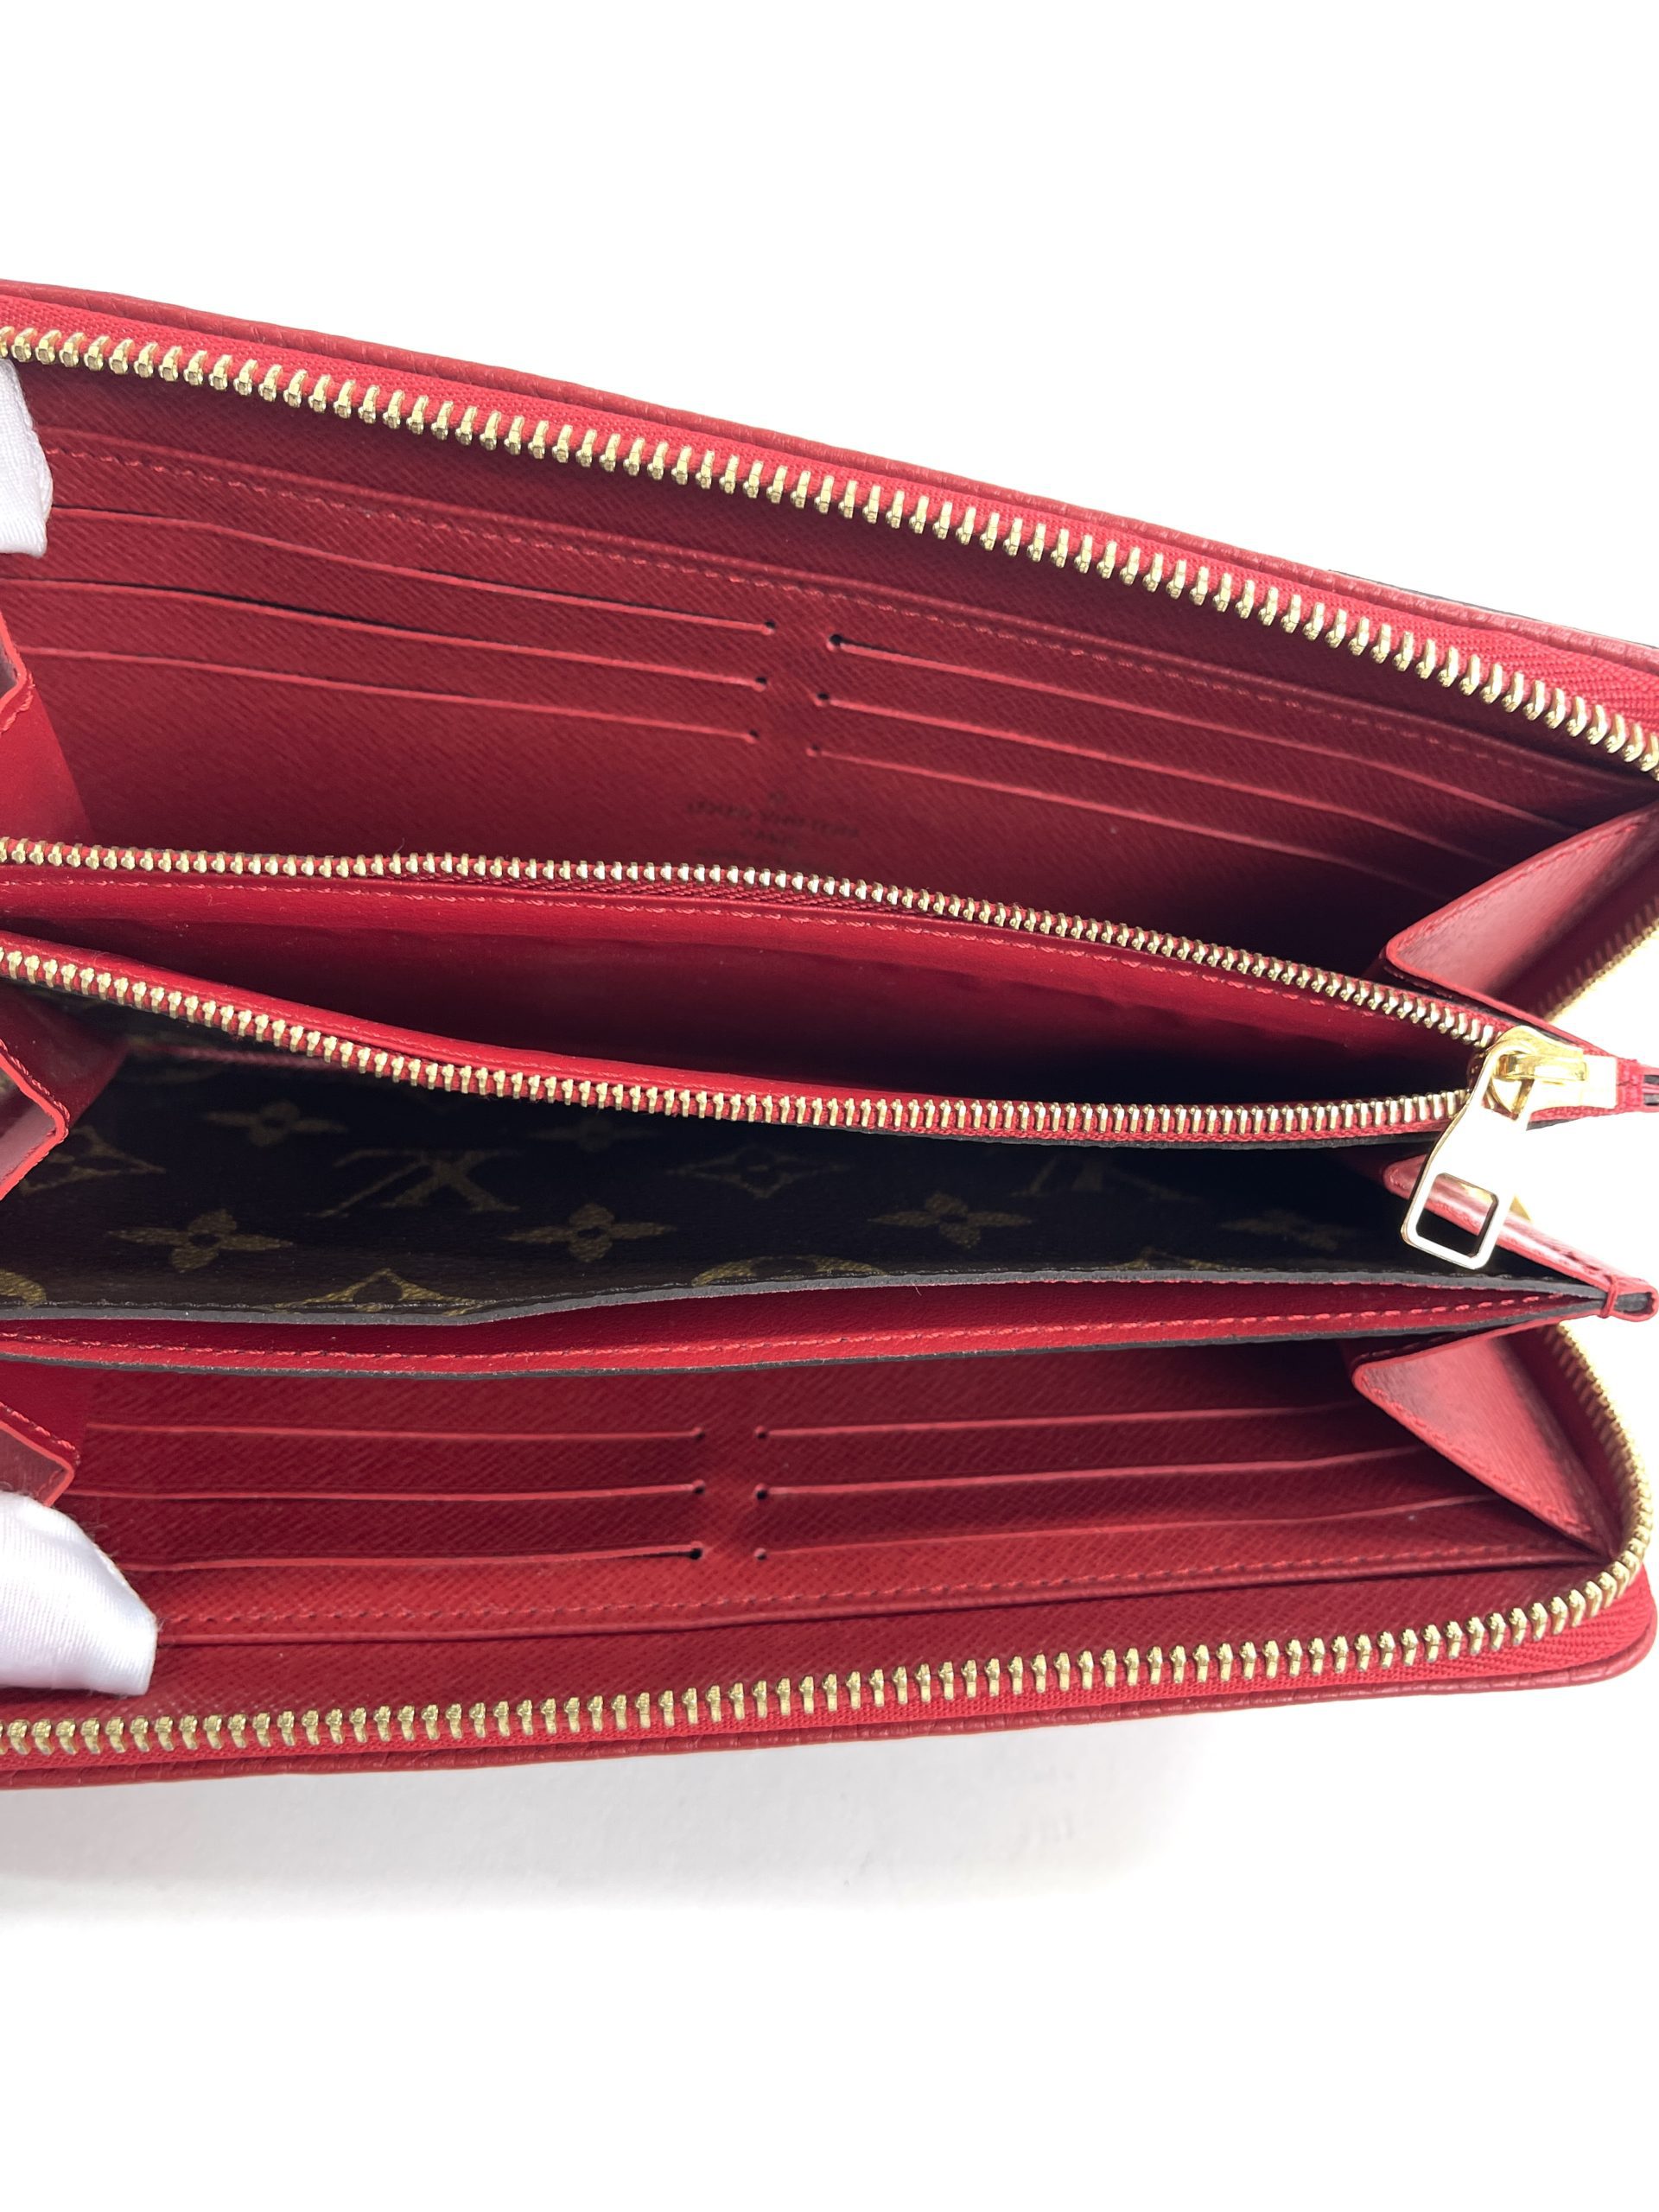 Louis Vuitton M61854 Monogram Zippy Wallet Retiro Brown Cerise Red